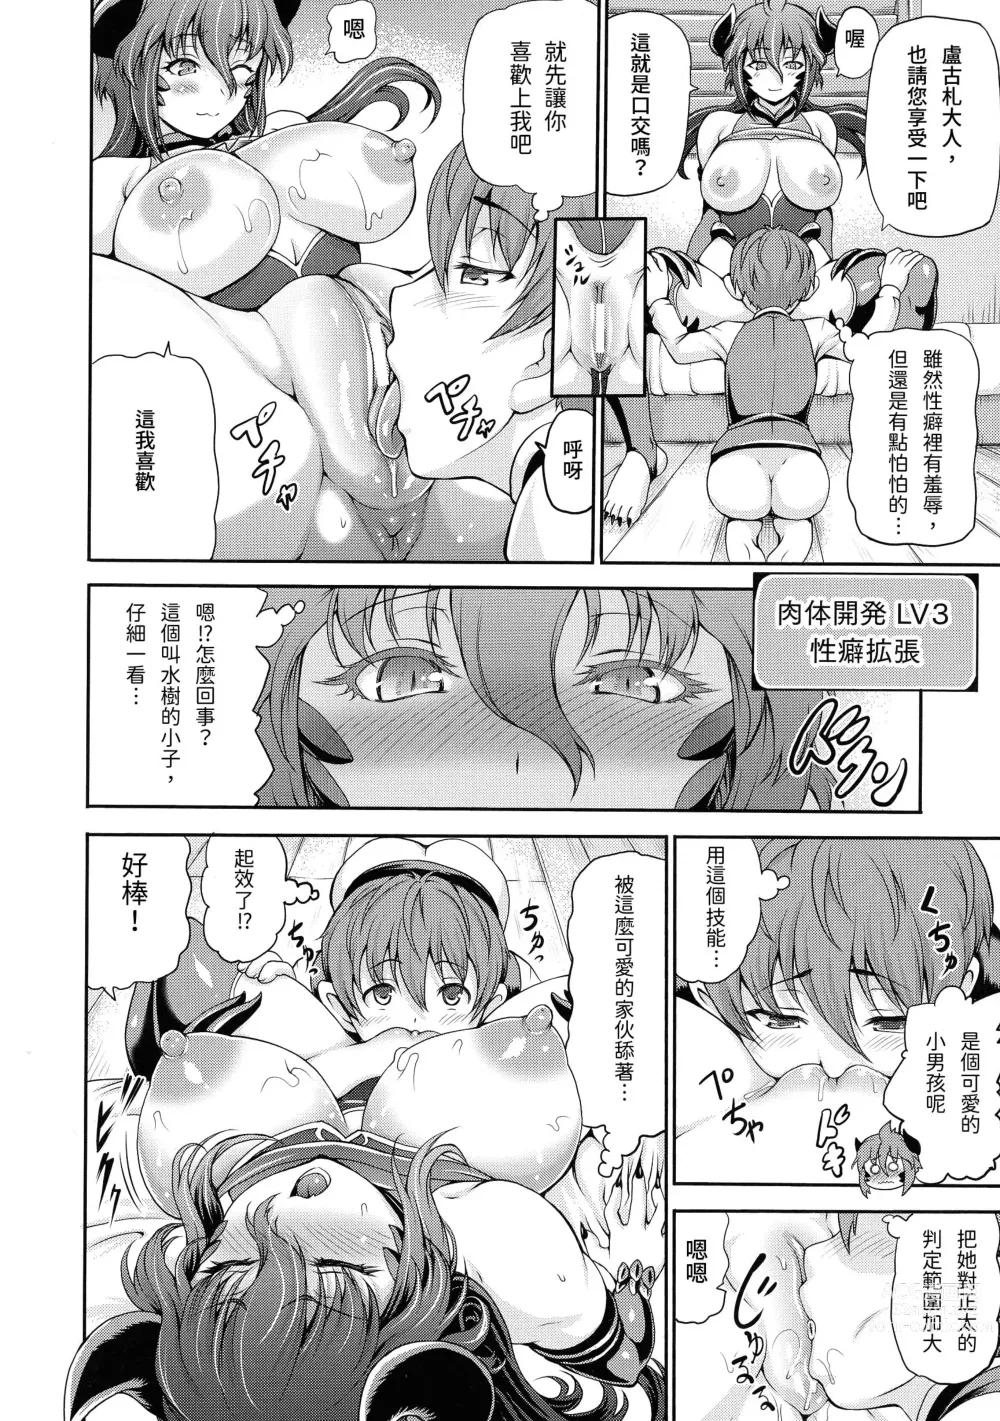 Page 10 of manga Isekai Shoukan 2 Ch. 1-4, 6-8